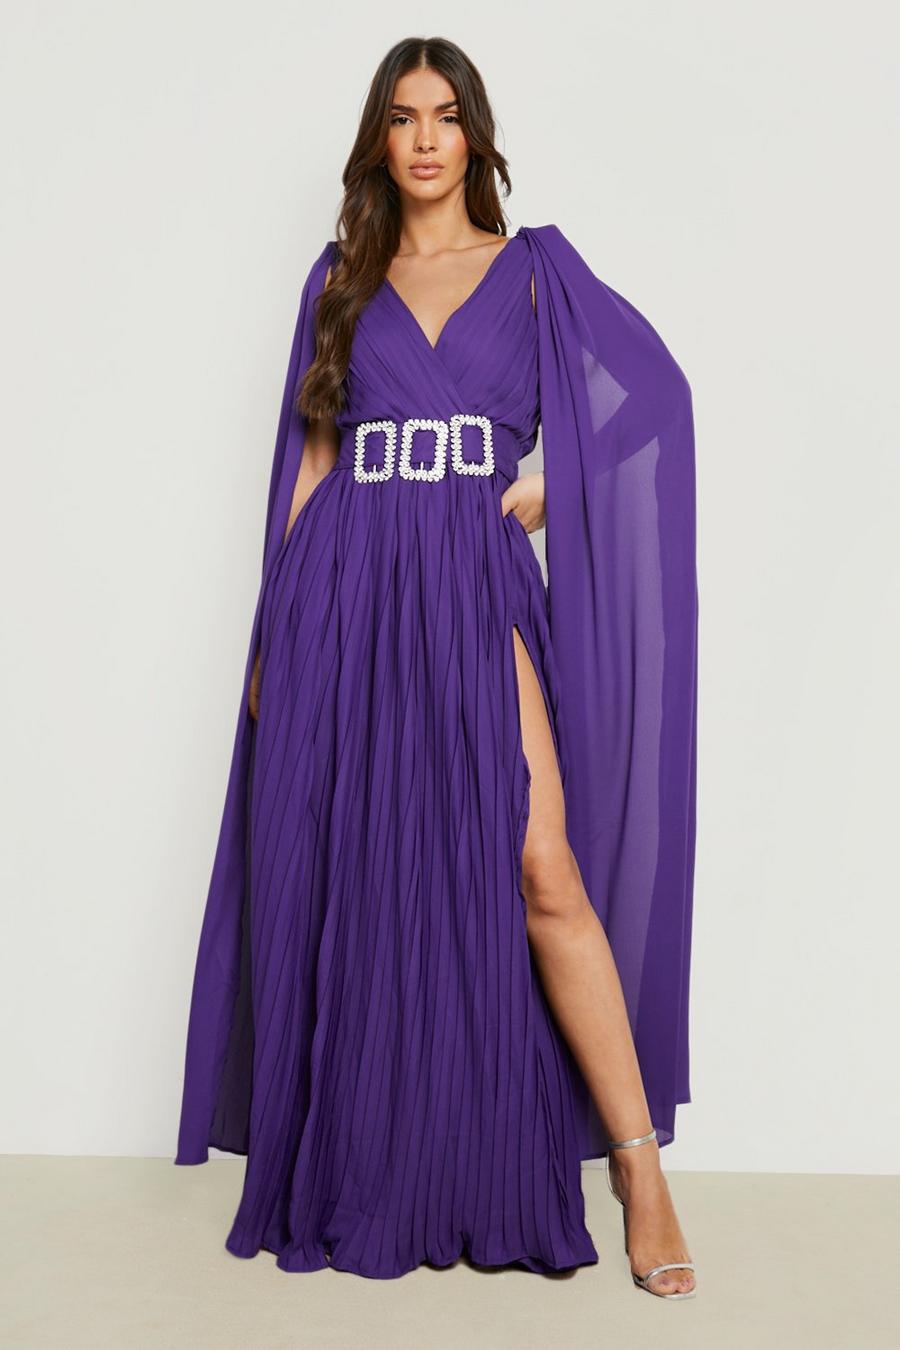 Jewel purple Pleated Chiffon Cape Diamante Trim Maxi Dress